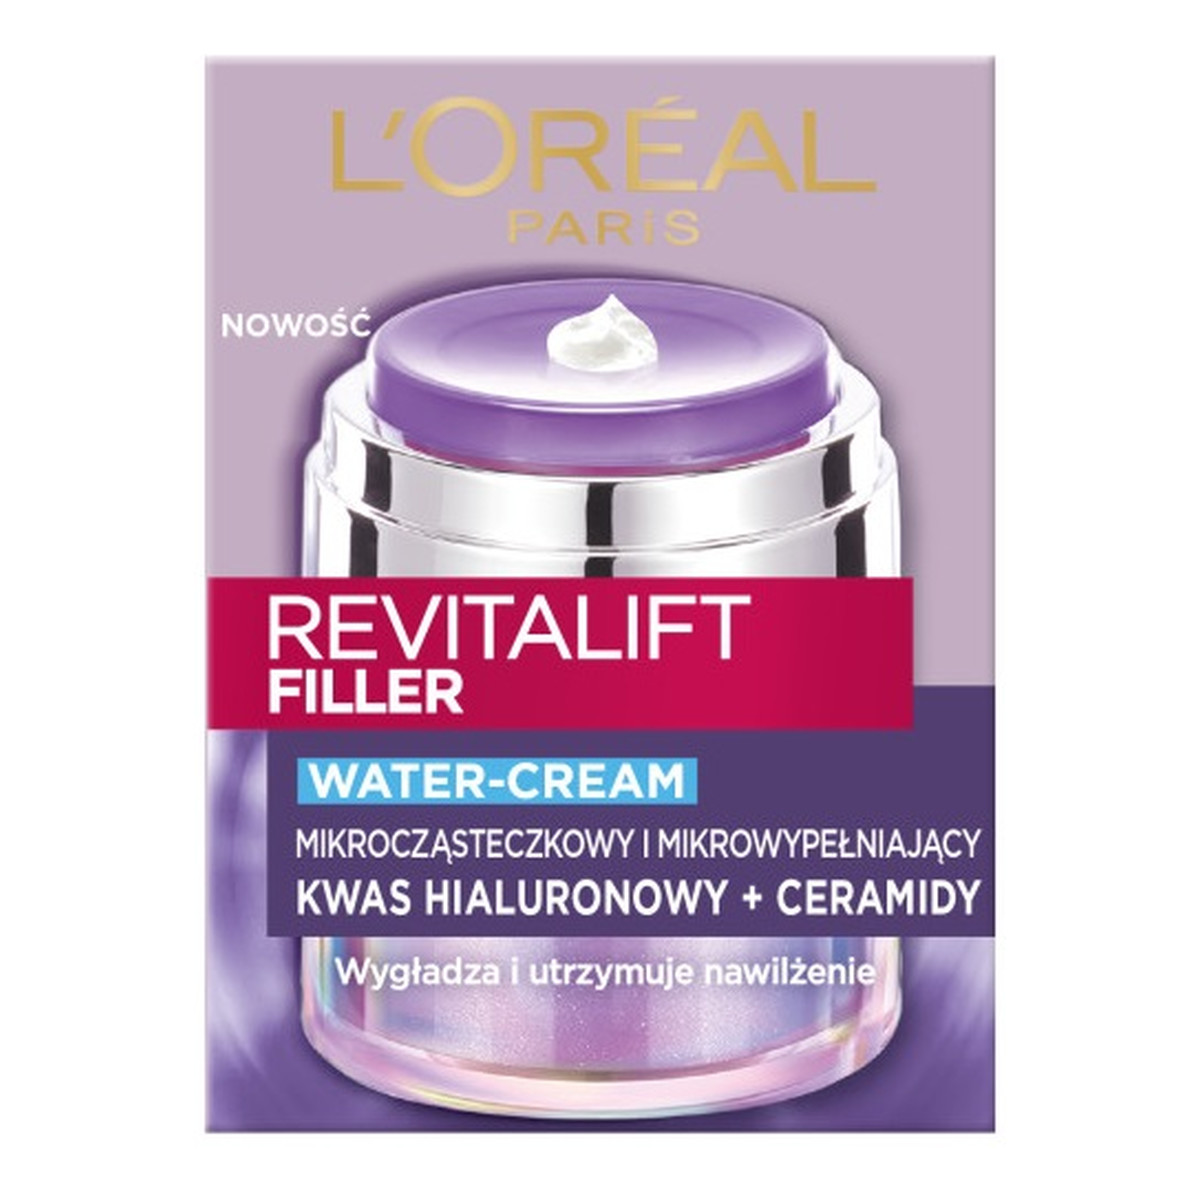 L'Oreal Paris Revitalift Filler Water-Cream ujędrniający Krem do twarzy 50ml